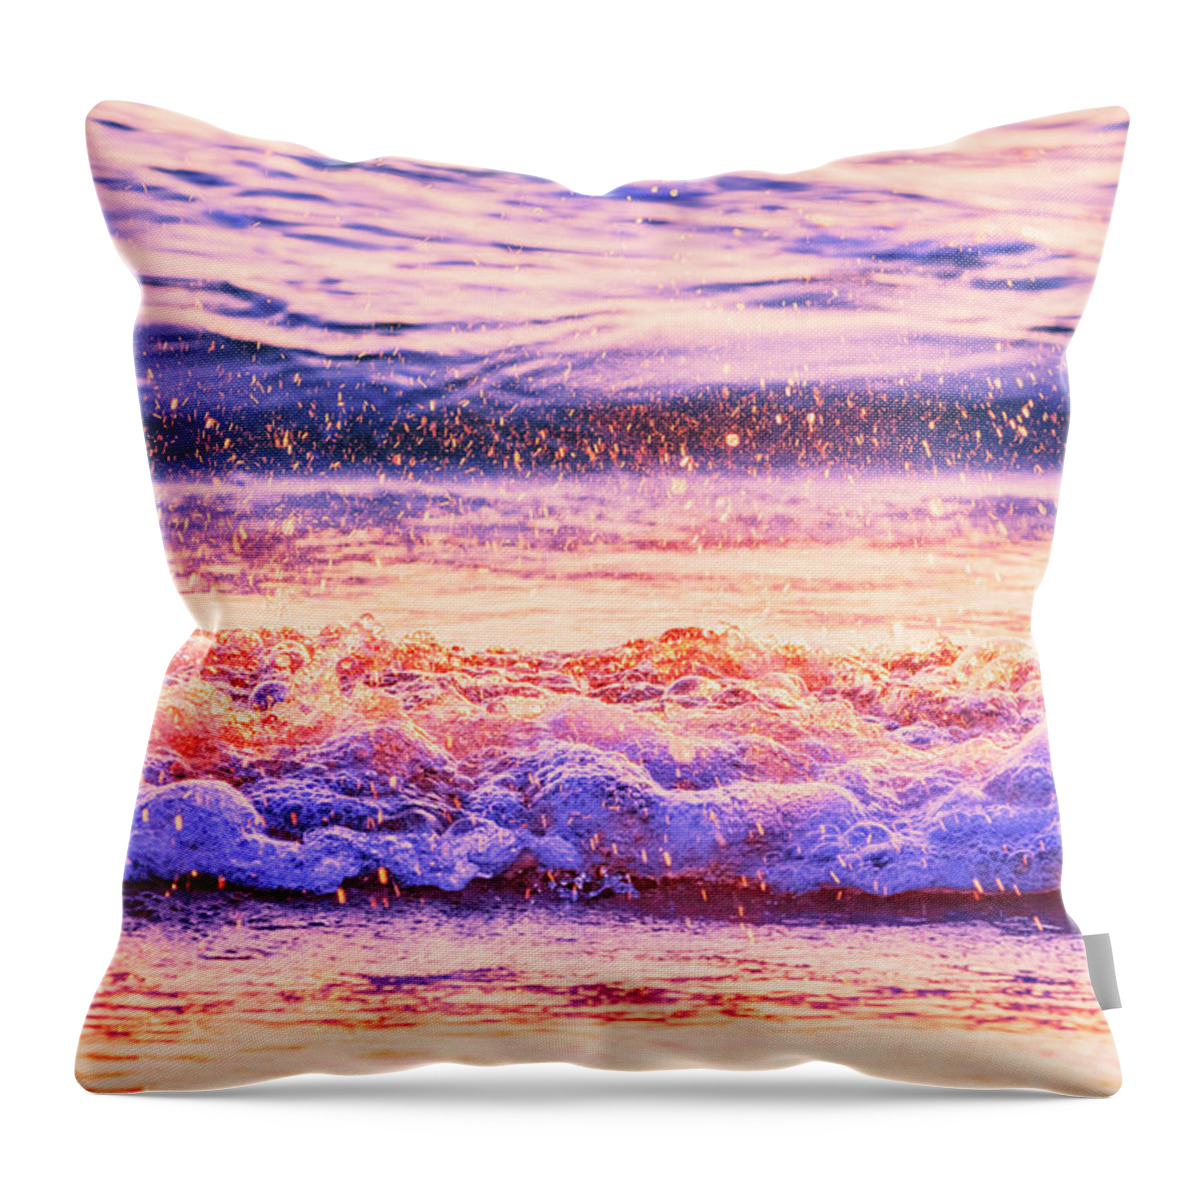 Atlantic Ocean Throw Pillow featuring the photograph 4184 Delray Beach Florida Ocean Waves by Amyn Nasser Neptune Gallery